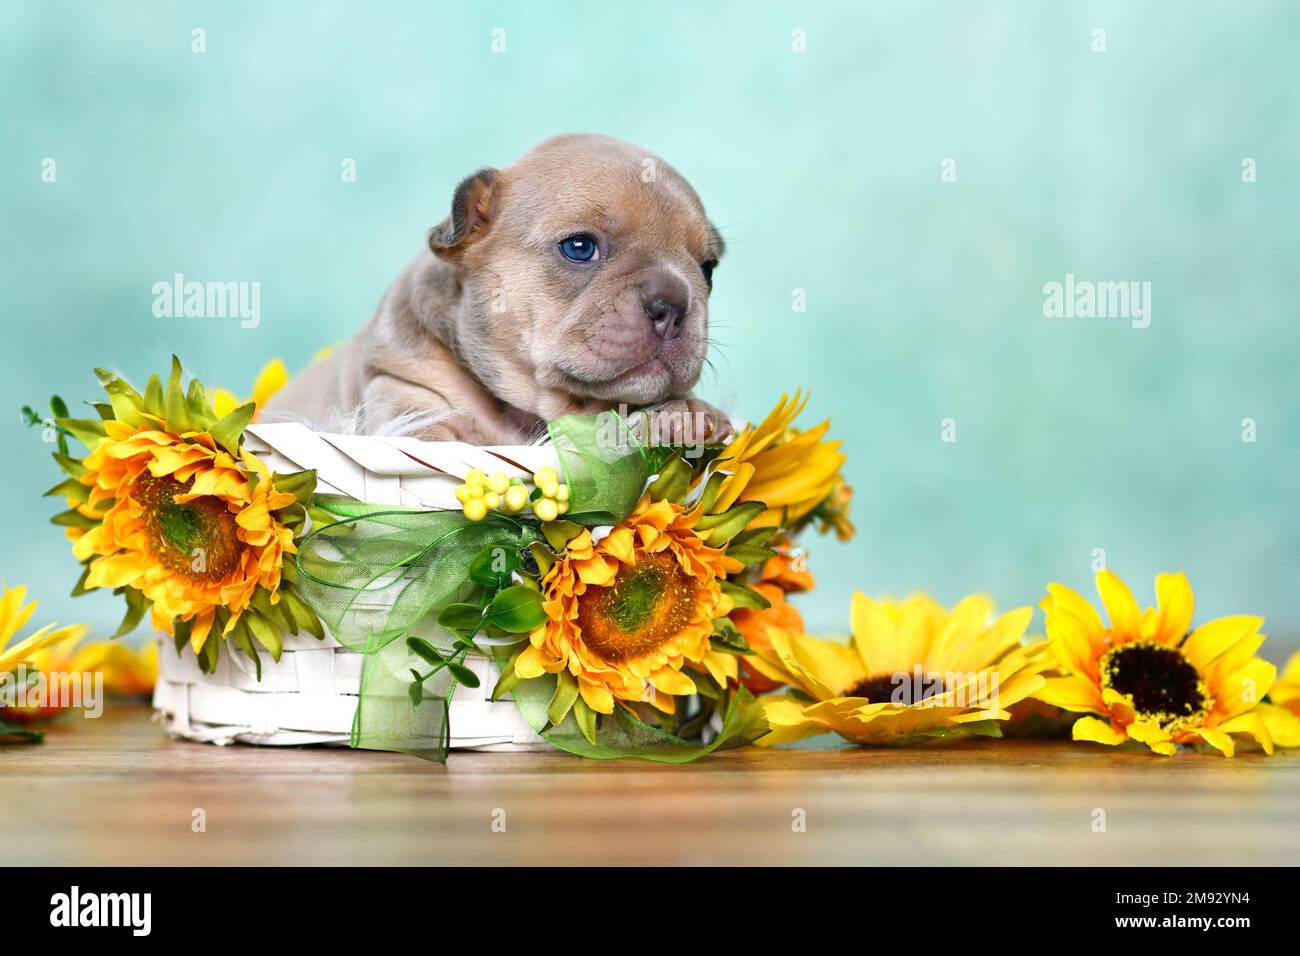 3 weeks old French Bulldog dog puppy peeking out of white basket with sunflowers Stock Photo